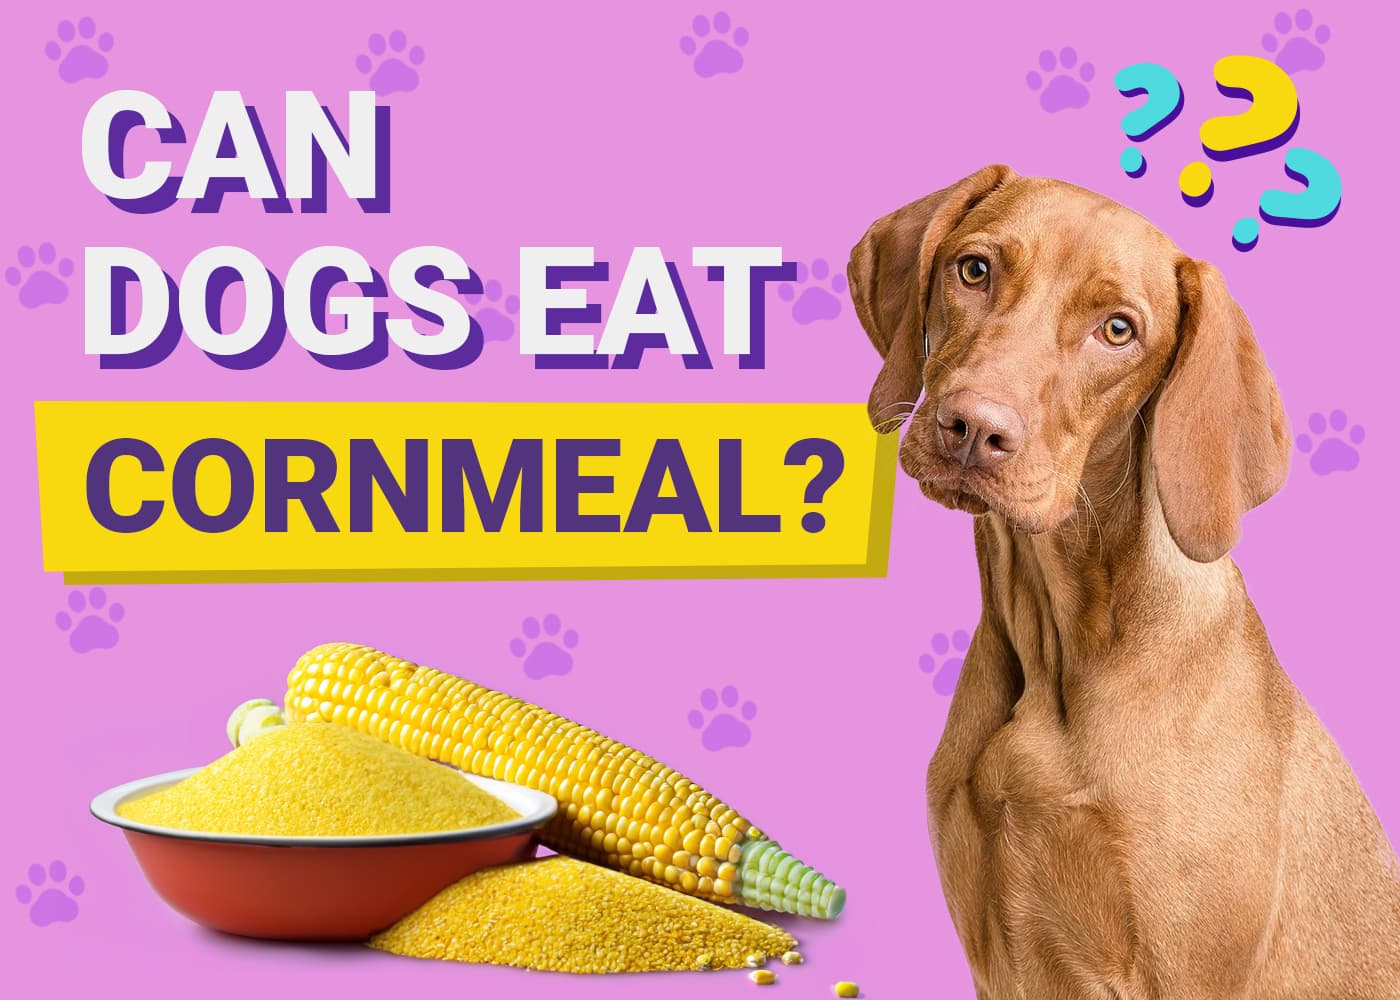 Can Dogs Eat Cornmeal